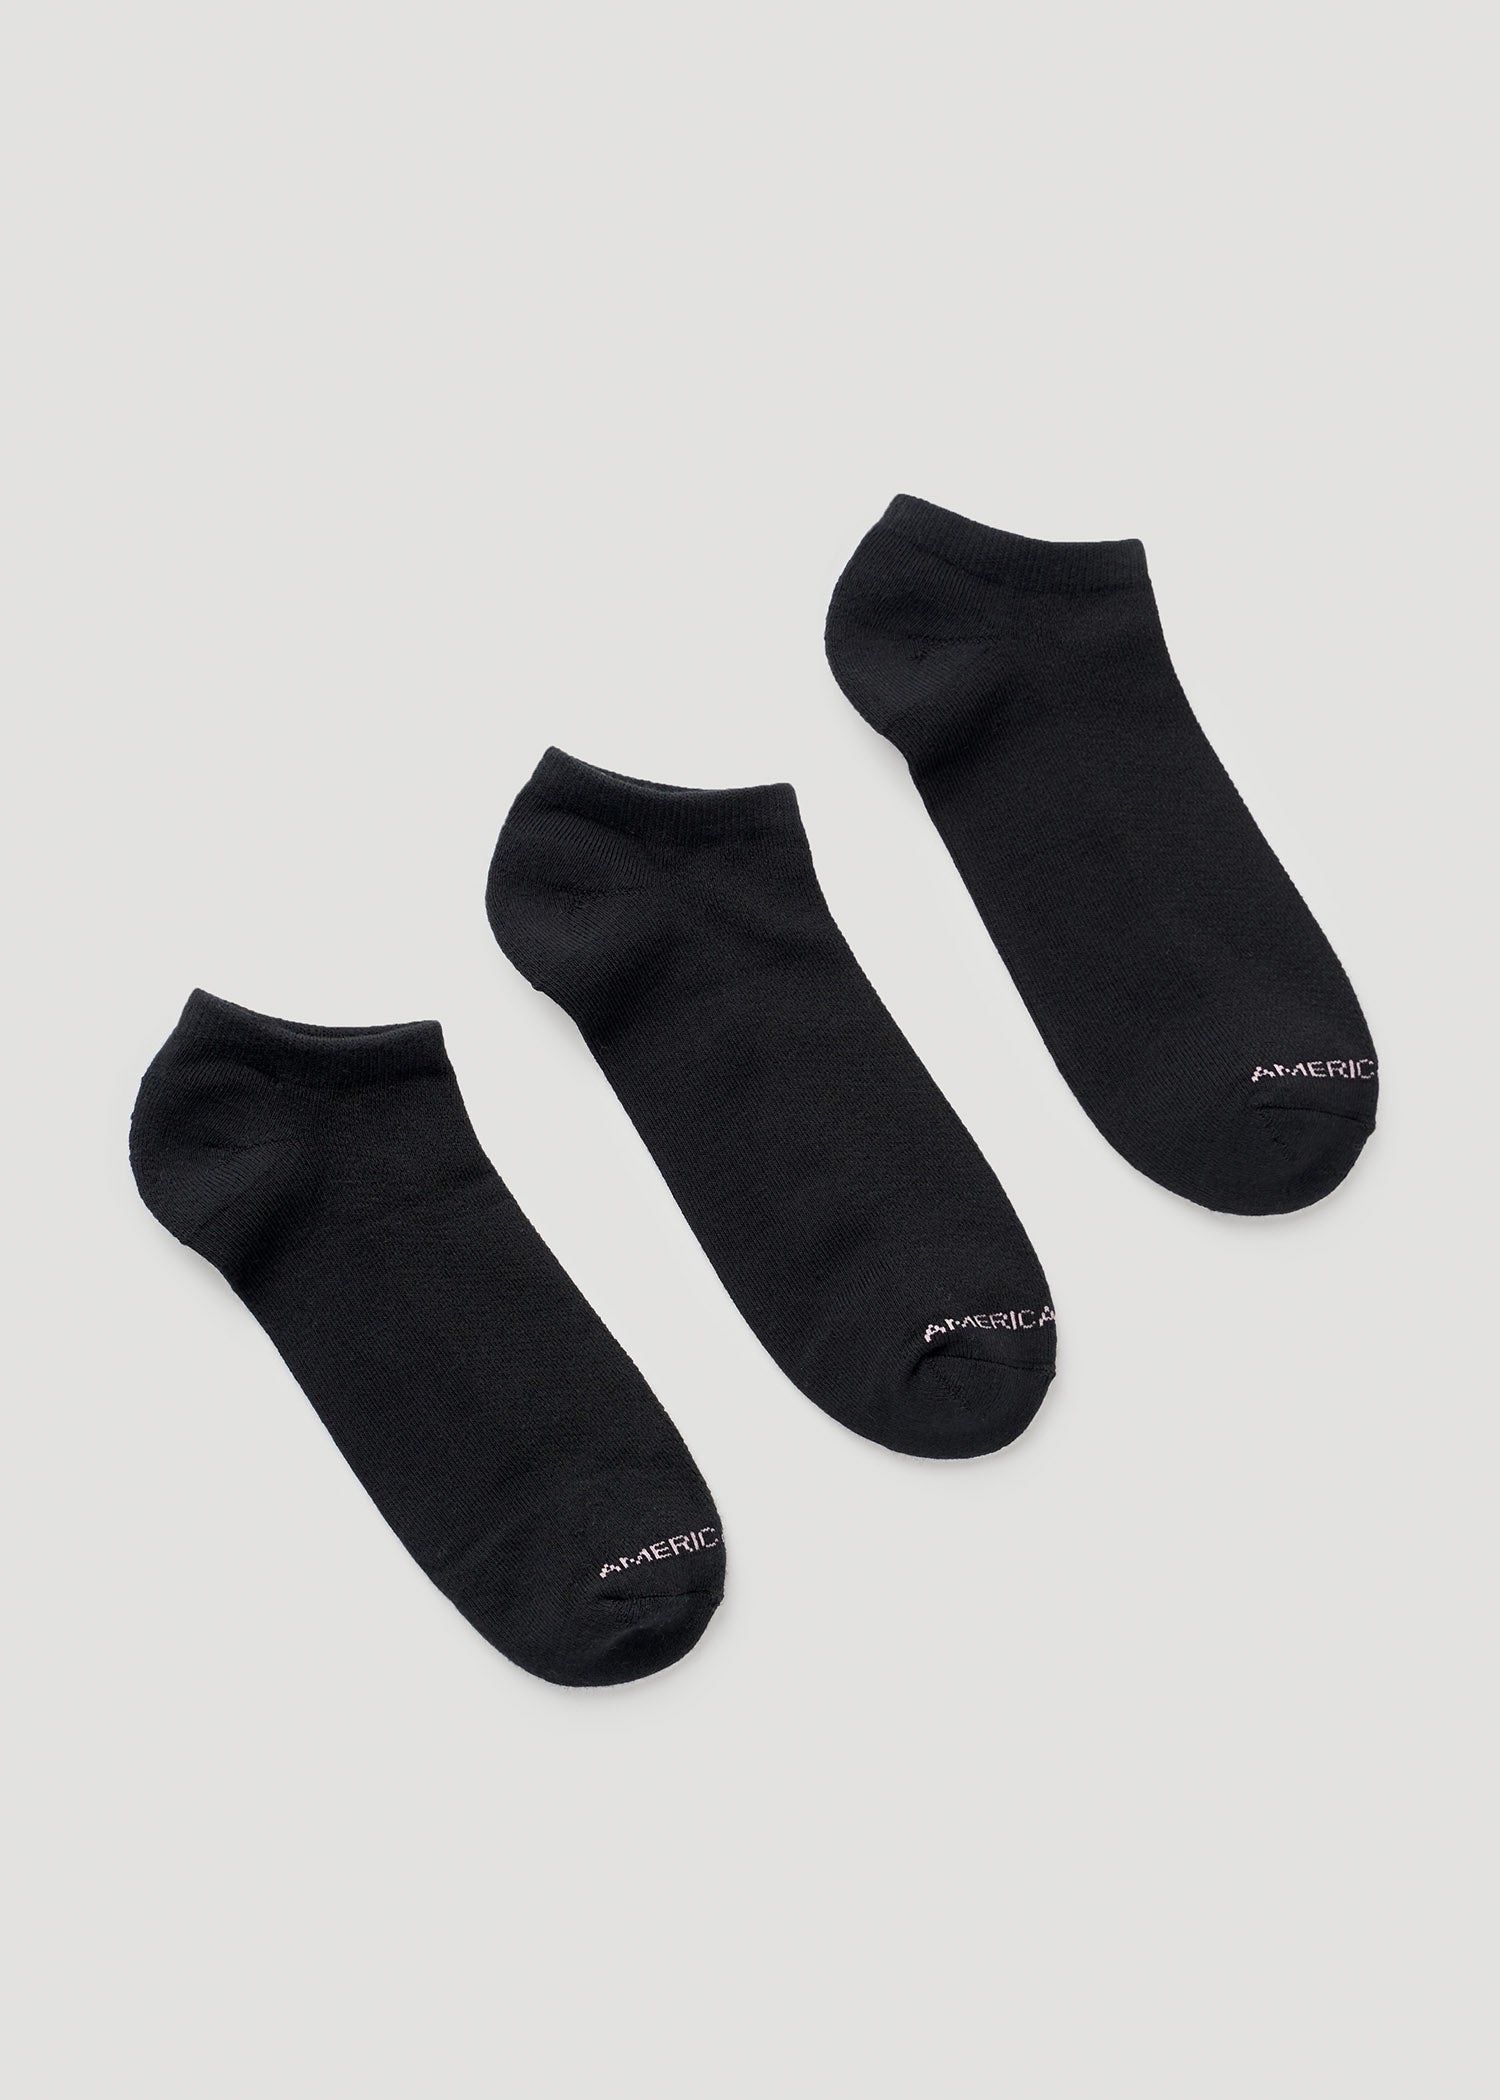 Women's Ankle Socks (X-Large Size: 10-13) | Black 3 Pack